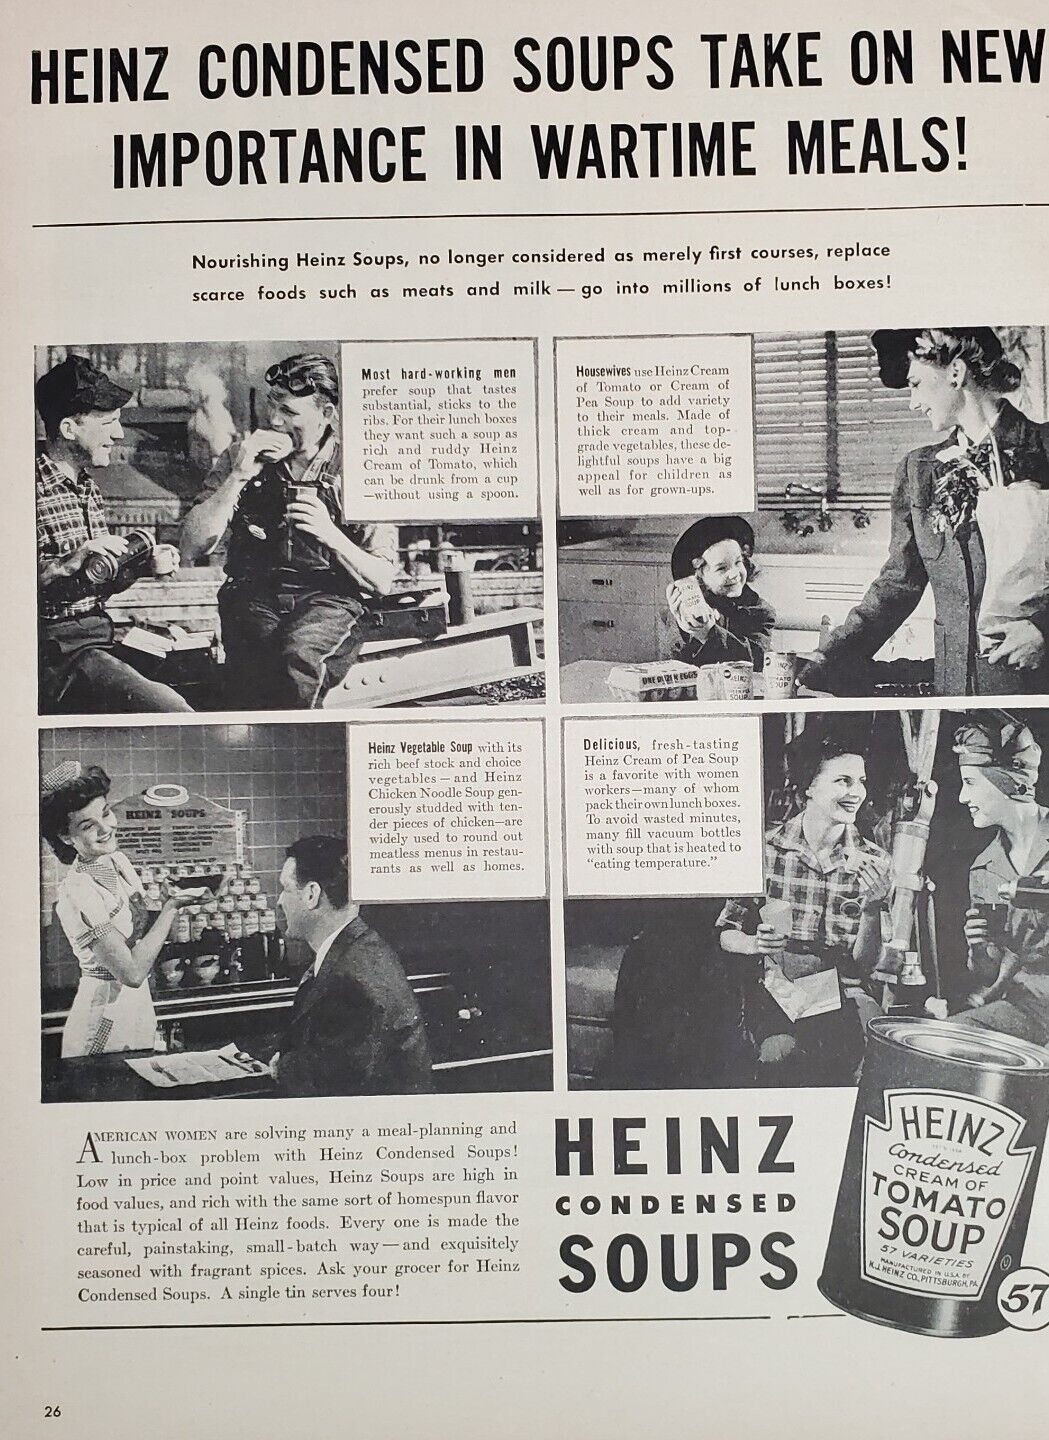 Heinz Tomato Soup Print Ad War Meals Lunch Boxes Advertisement 1944 Ephemera